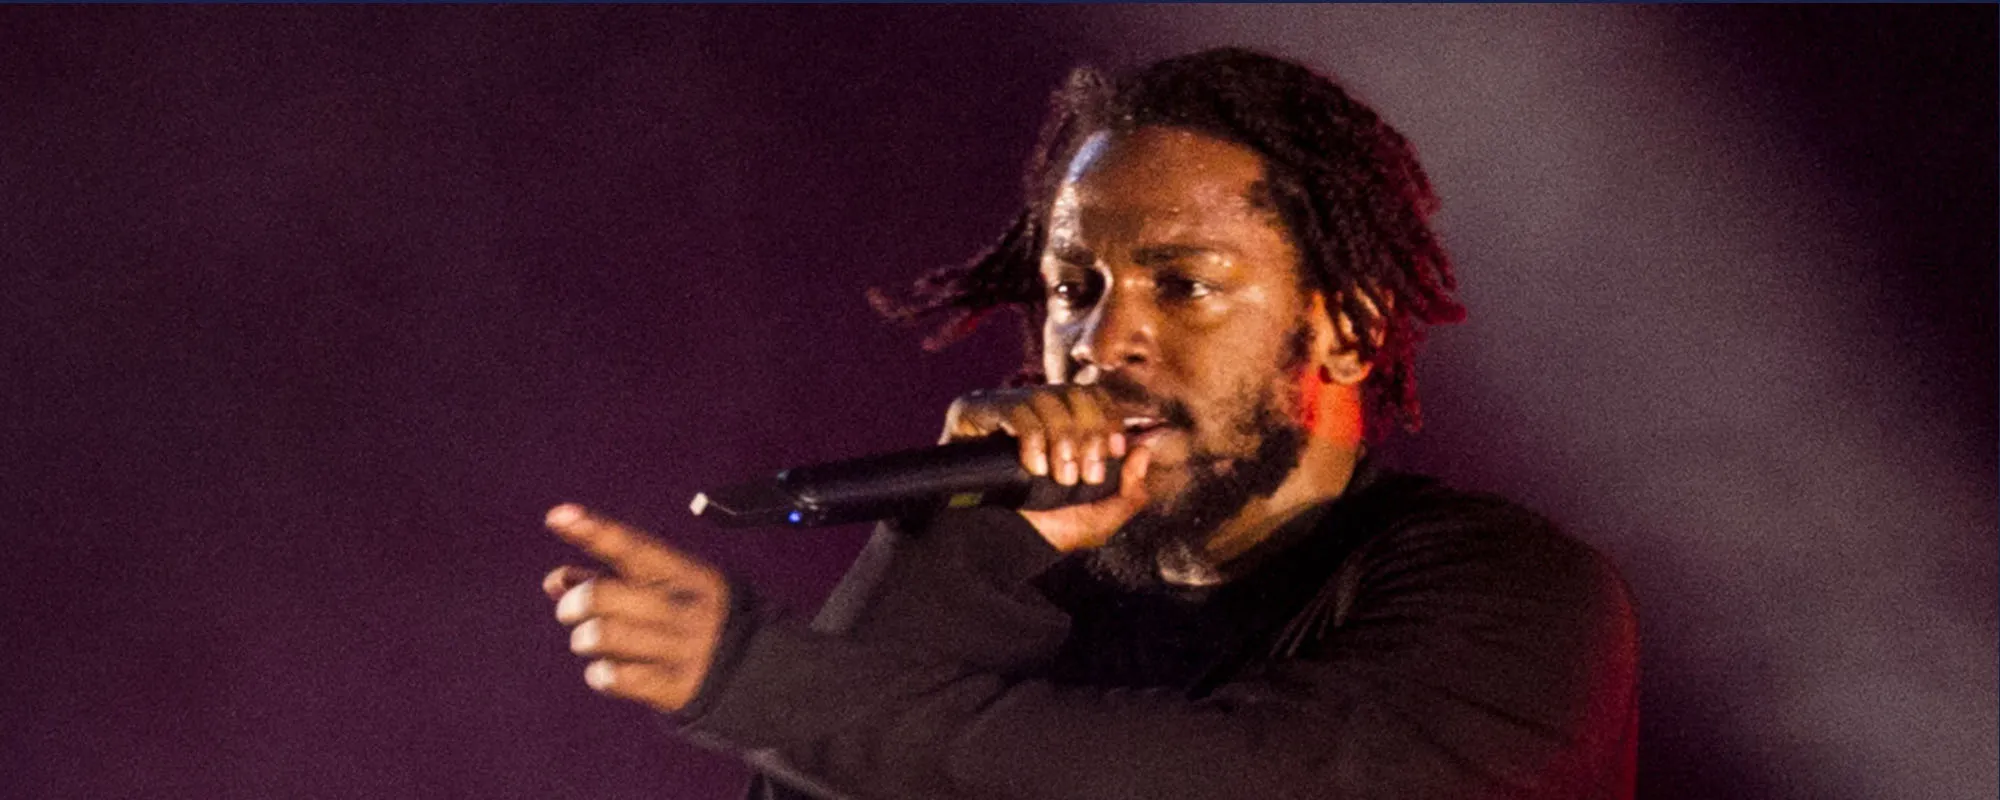 Kendrick Lamar Shares New Video For “Rich Spirit”